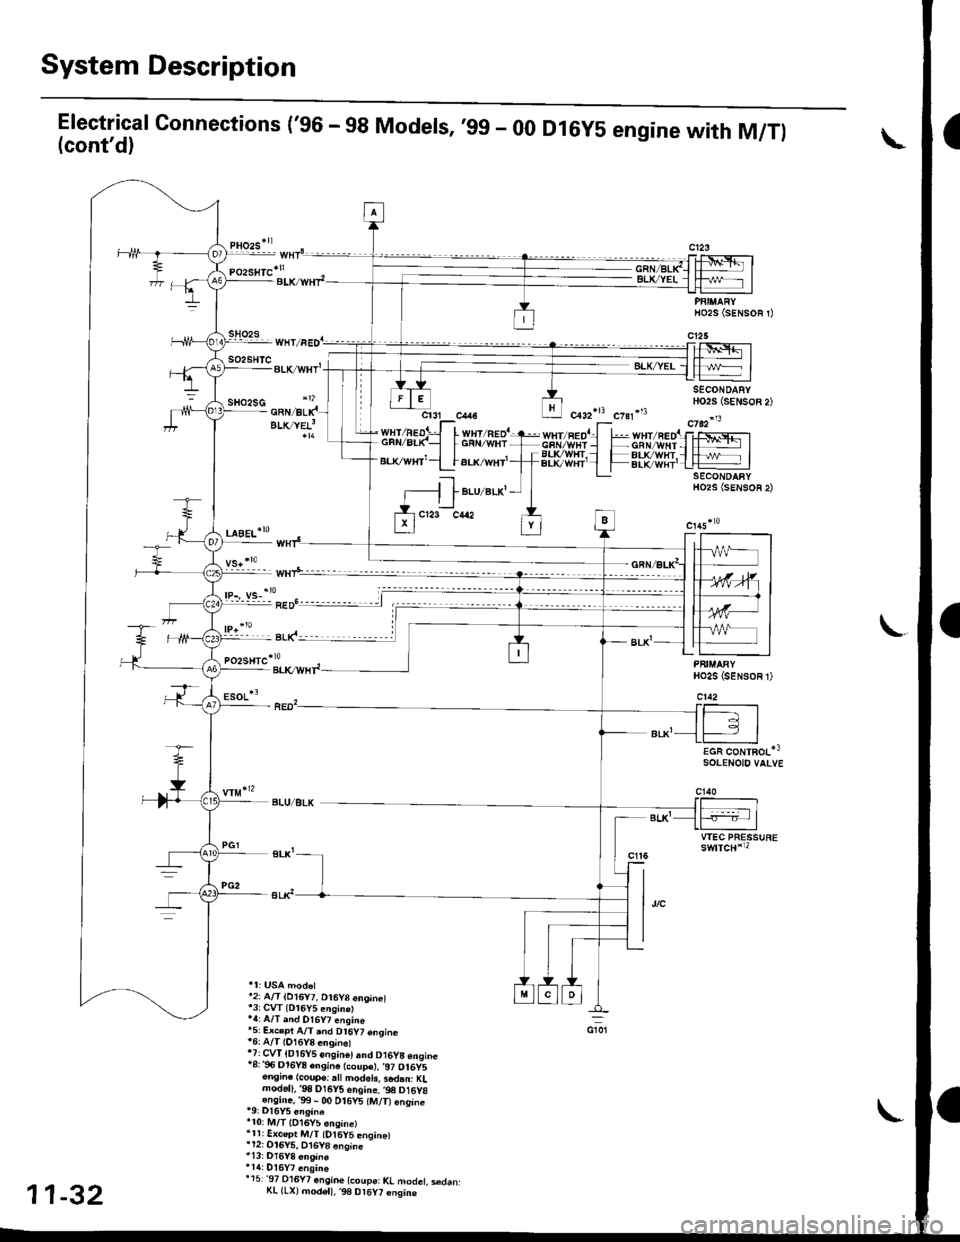 HONDA CIVIC 1998 6.G User Guide System Description
Electrical Connections (96 - 98 Models, ,99 - 00 Dl6y5 engine with M/T)(contd)
ptozs"
pozslttc*rr
WHT,REDl
s02sHTc-BLK/WHT
aLKlyeL!
LraeL*ro
pozsntc*lu
:soL*3
BLU/ALK
12: A/T (